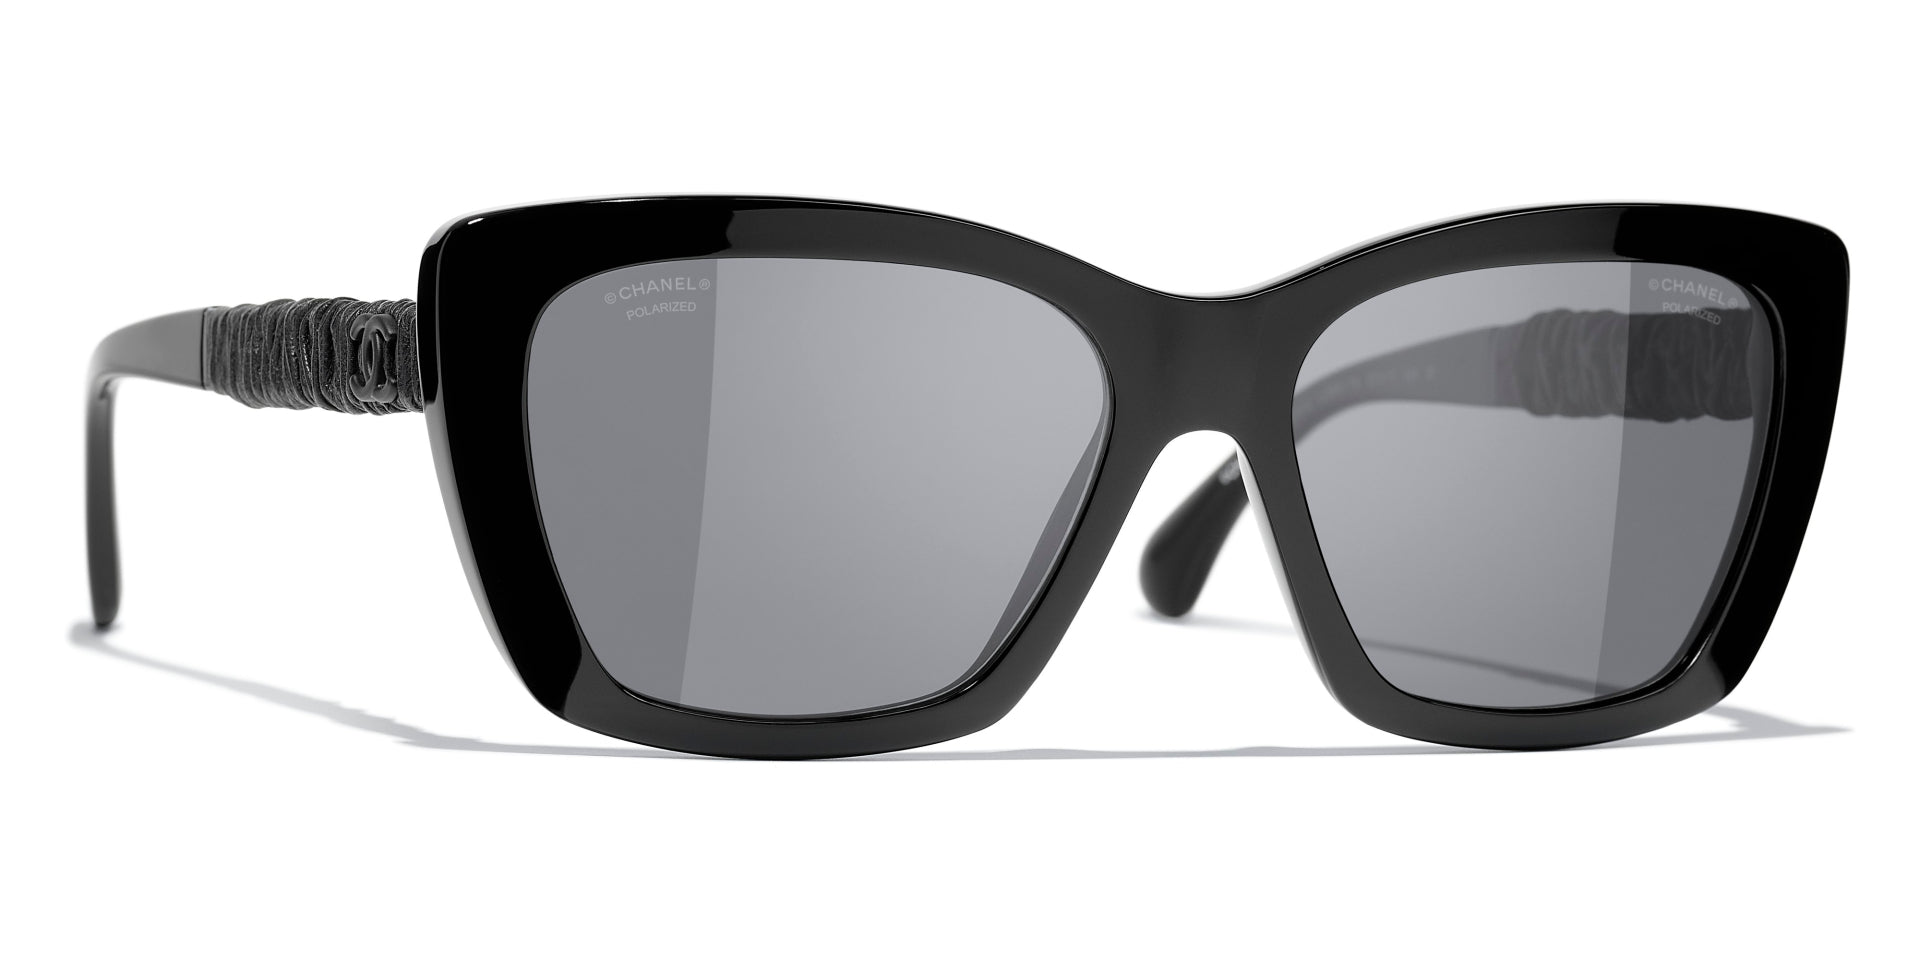 Chanel 5476Q Sunglasses Black/Grey Butterfly Women